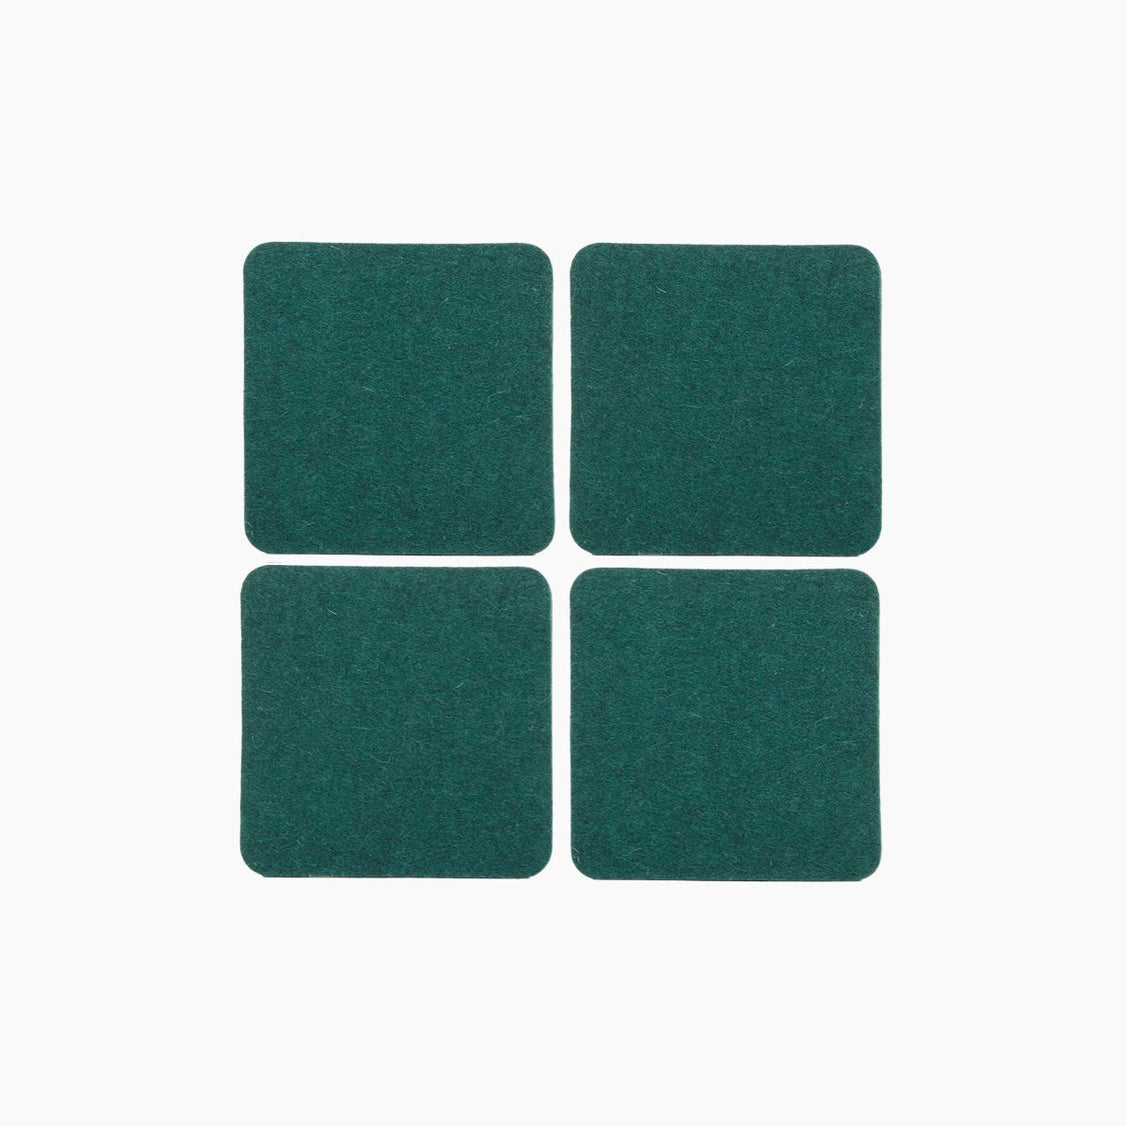 Bierfilzl Square Felt Coaster 4-pack (choose color) Kombu (Solid)